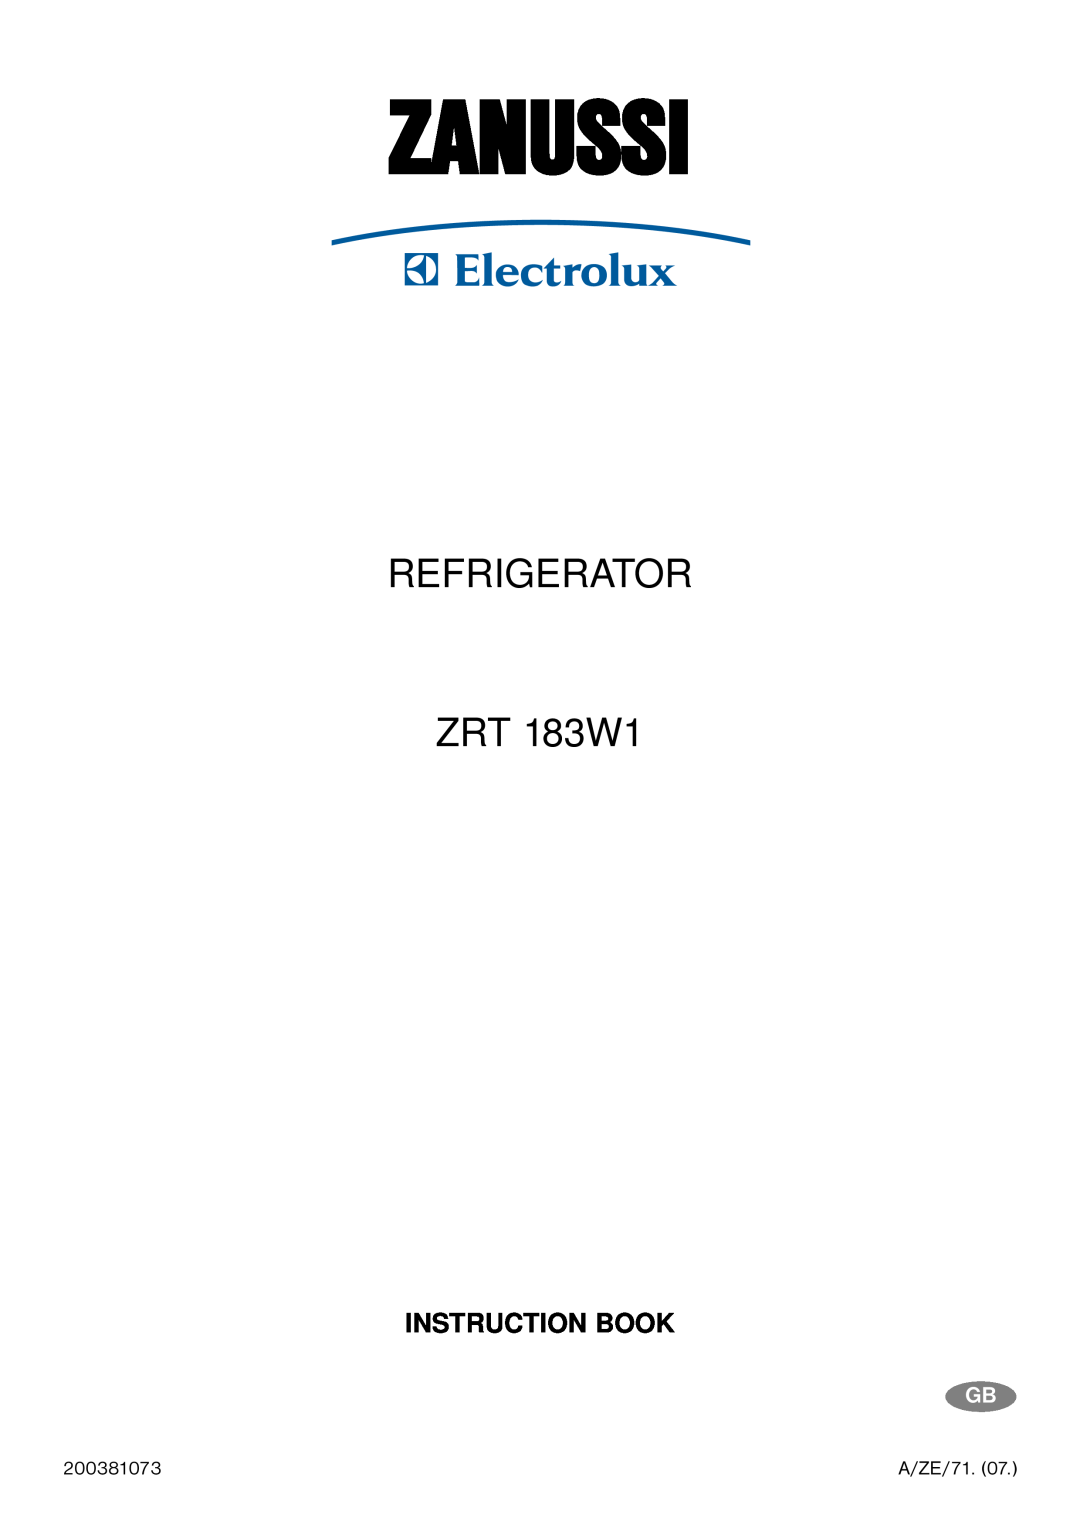 Zanussi manual Zanussi, REFRIGERATOR ZRT 183W1, Instruction Book 